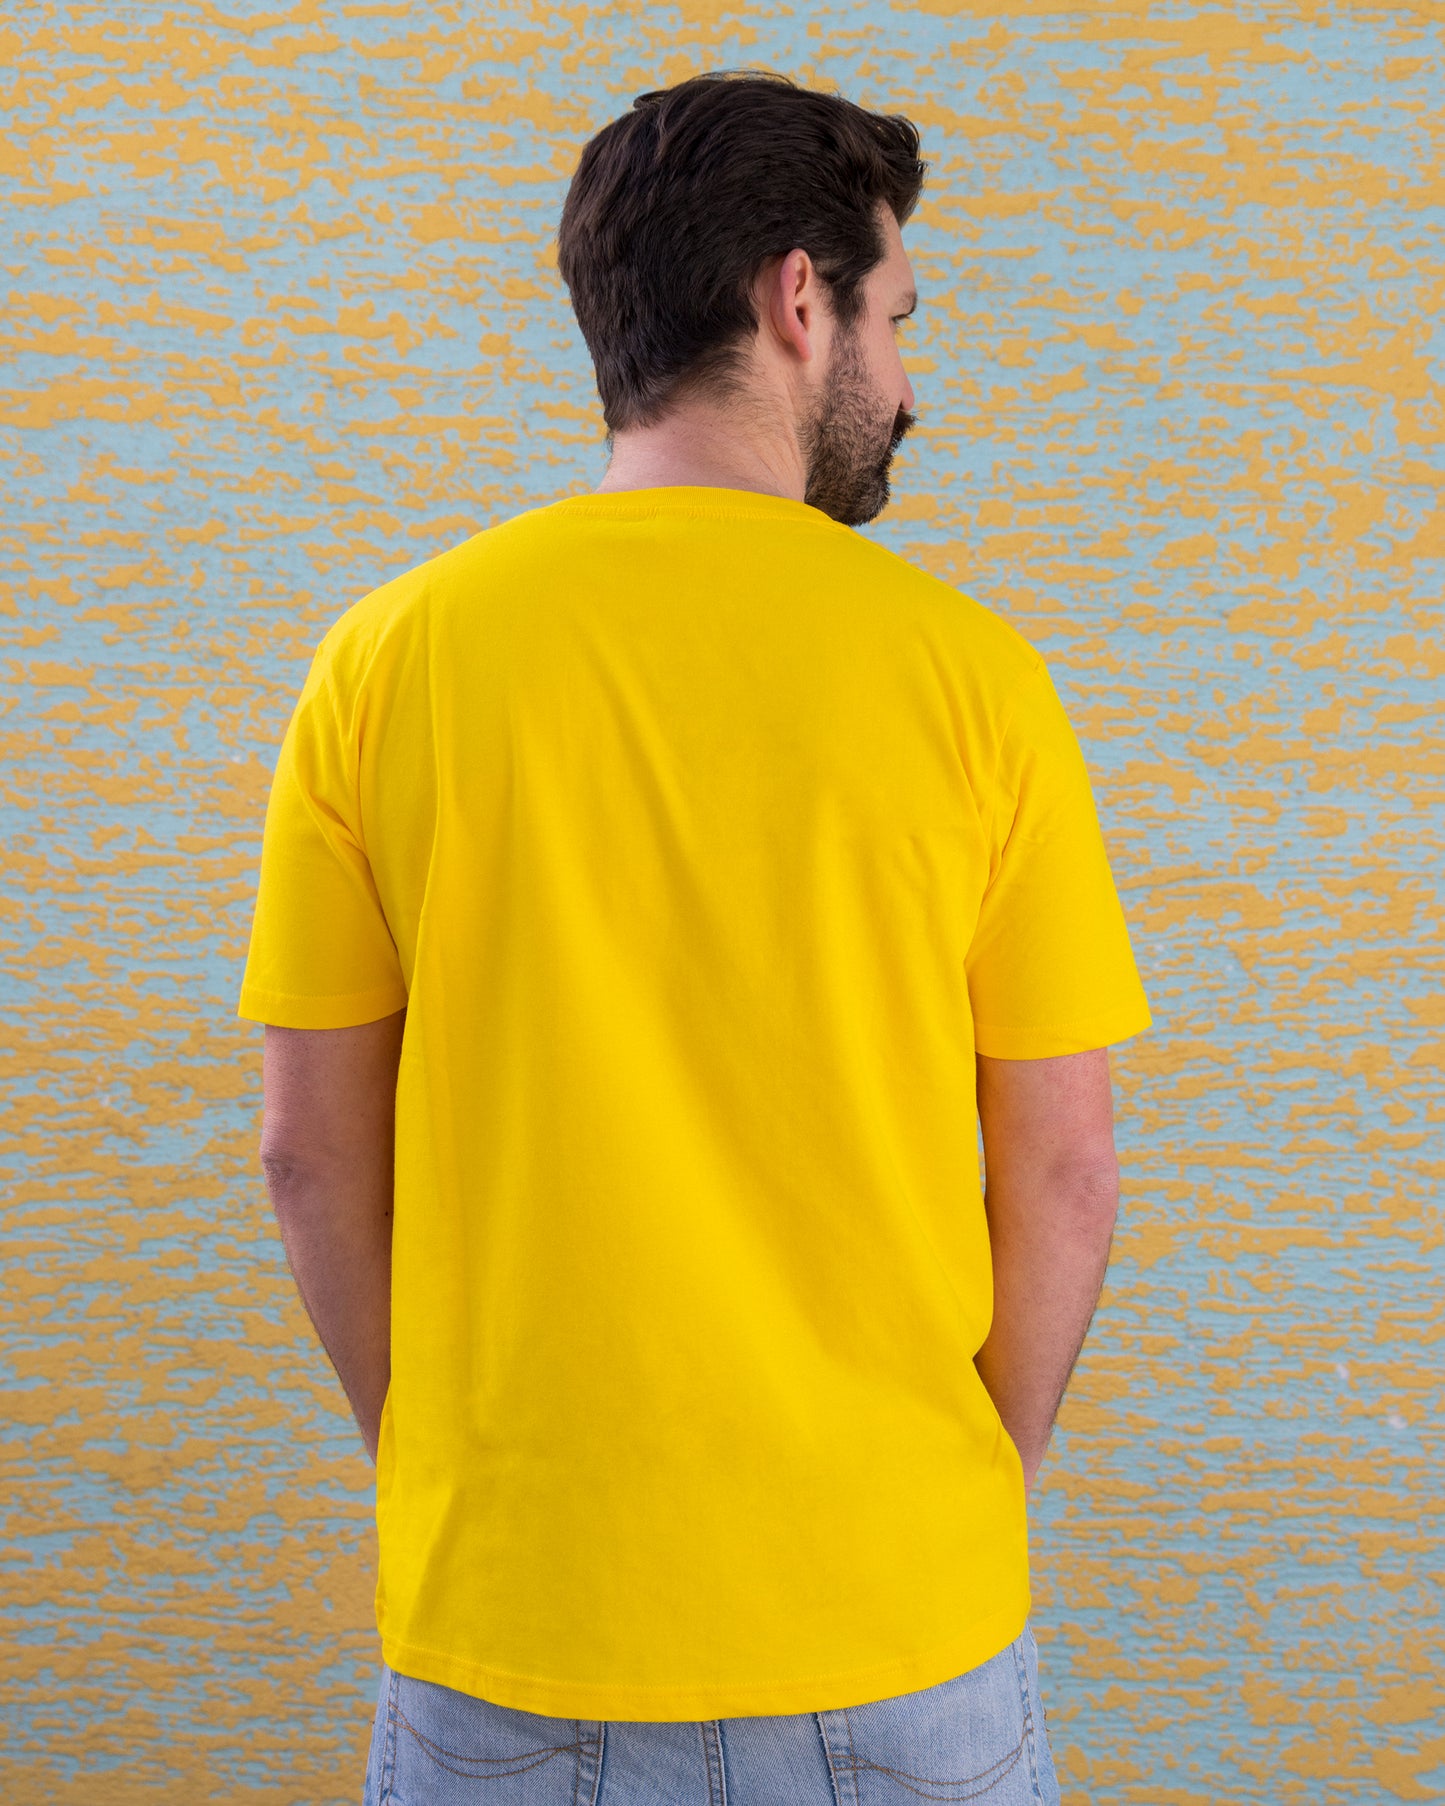 Unisex T-Shirt “Ban Waste Trade!” Keith Haring Design Print